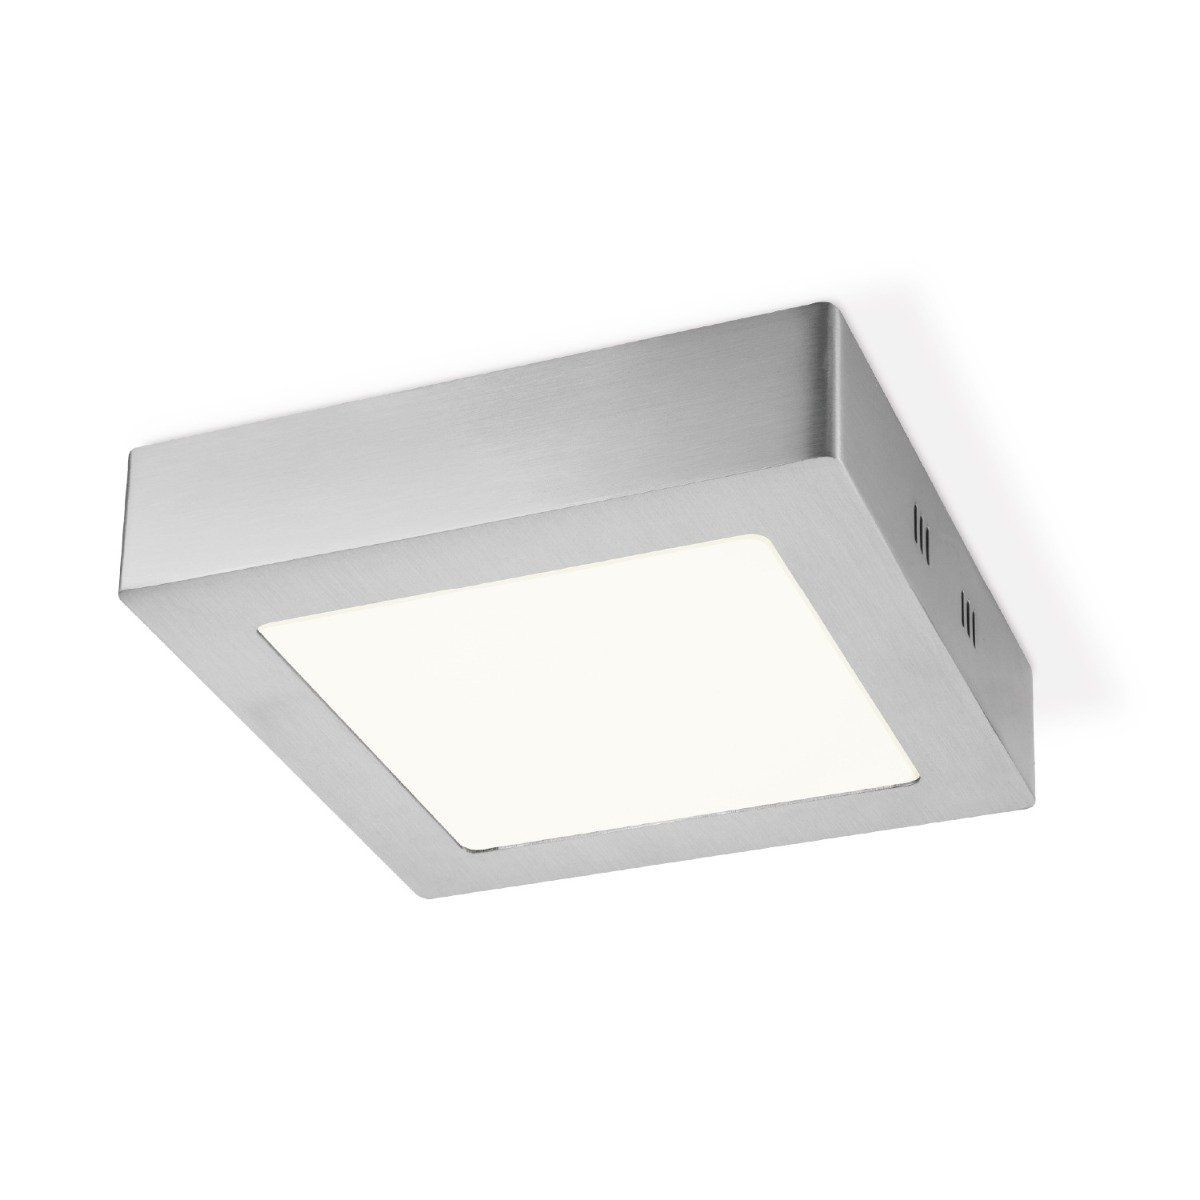 Light depot - LED plafondlamp Ska vierkant 17 - mat staal - Outlet